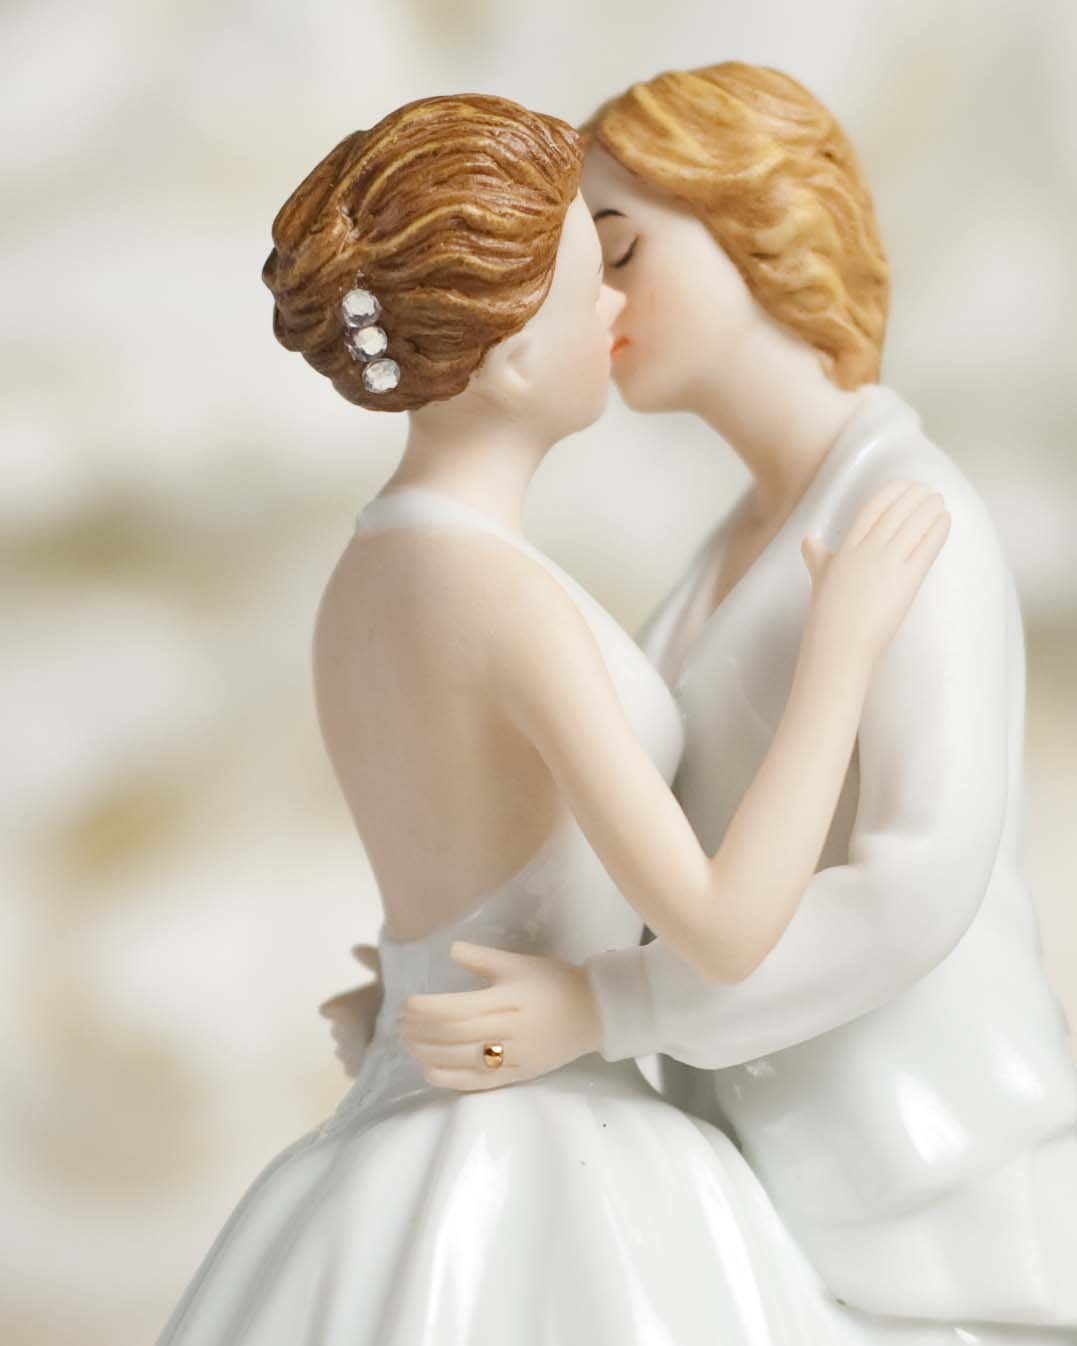 Lesbian Wedding Cake
 "Romance" Gay Lesbian Wedding Cake Topper